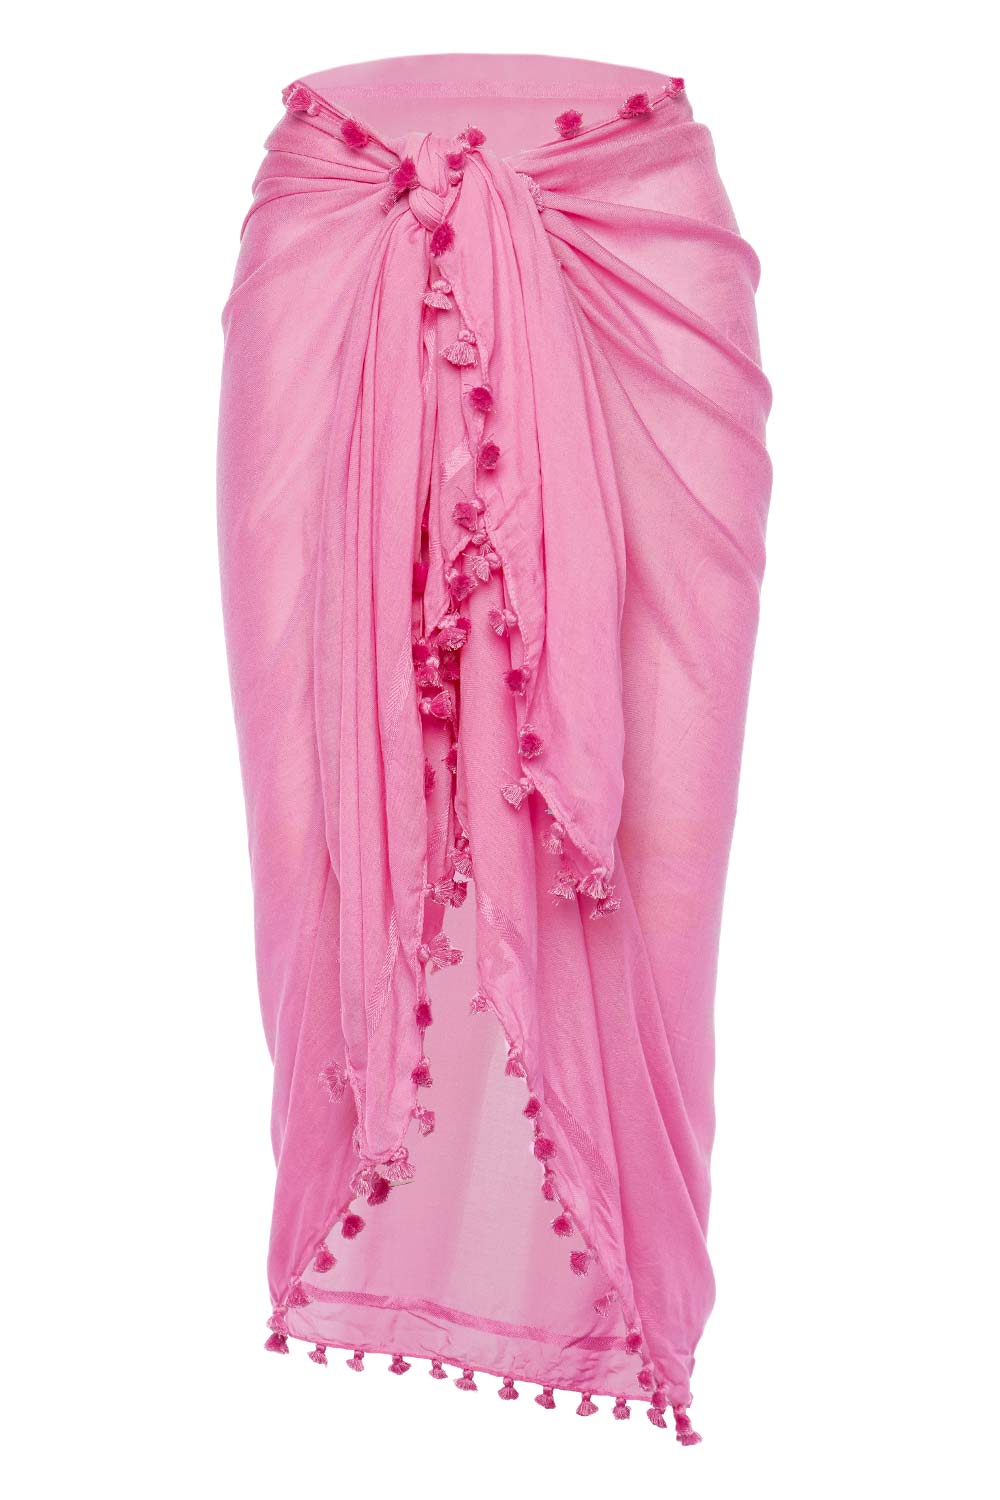 Melissa Odabash Pink Tasseled Pareo Cover Up